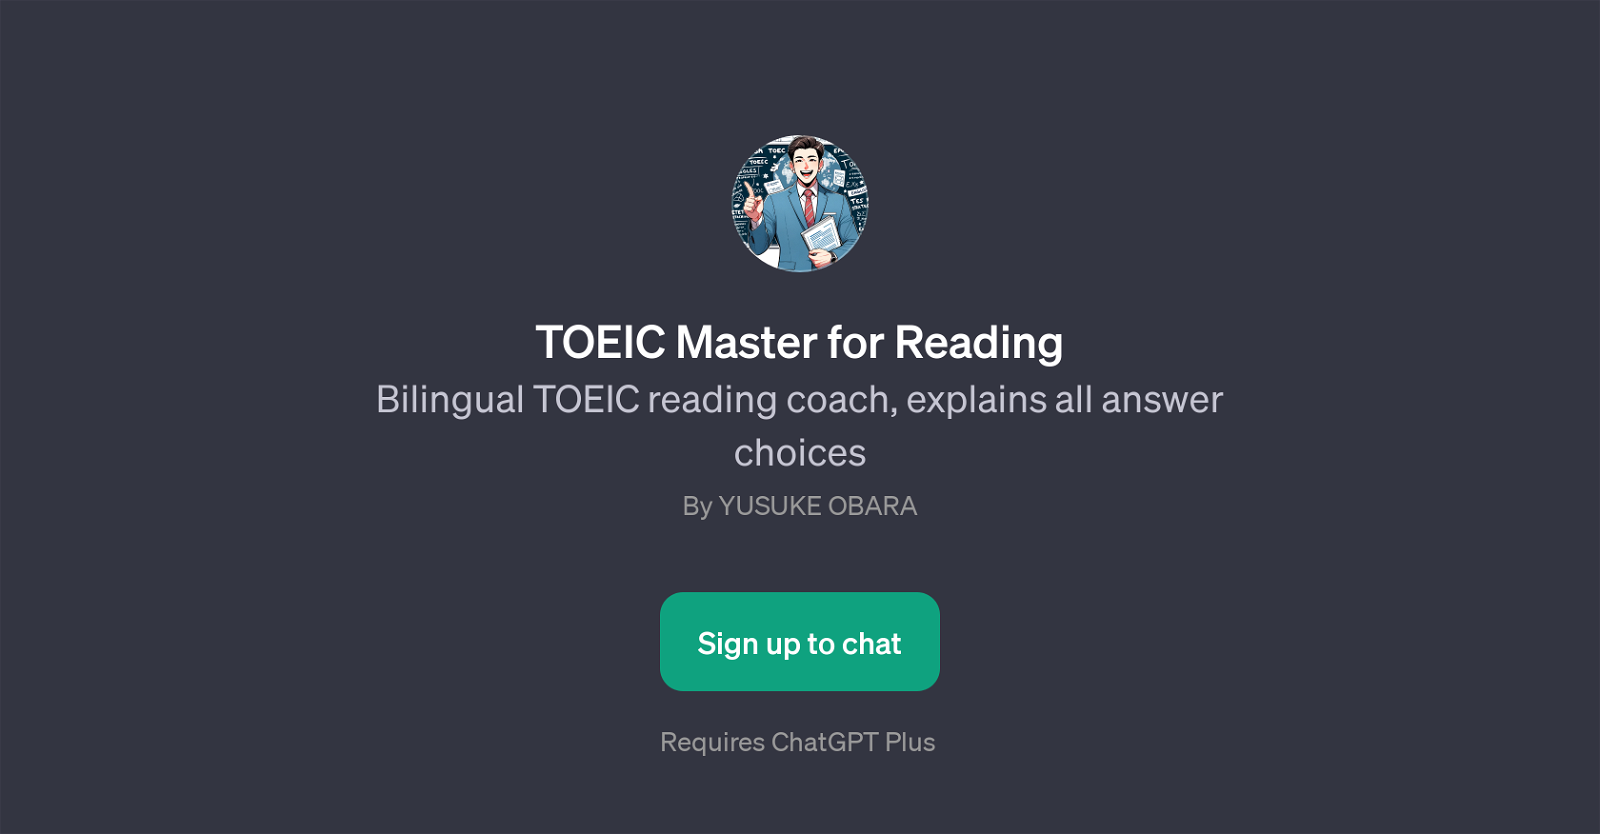 TOEIC Master for Reading website